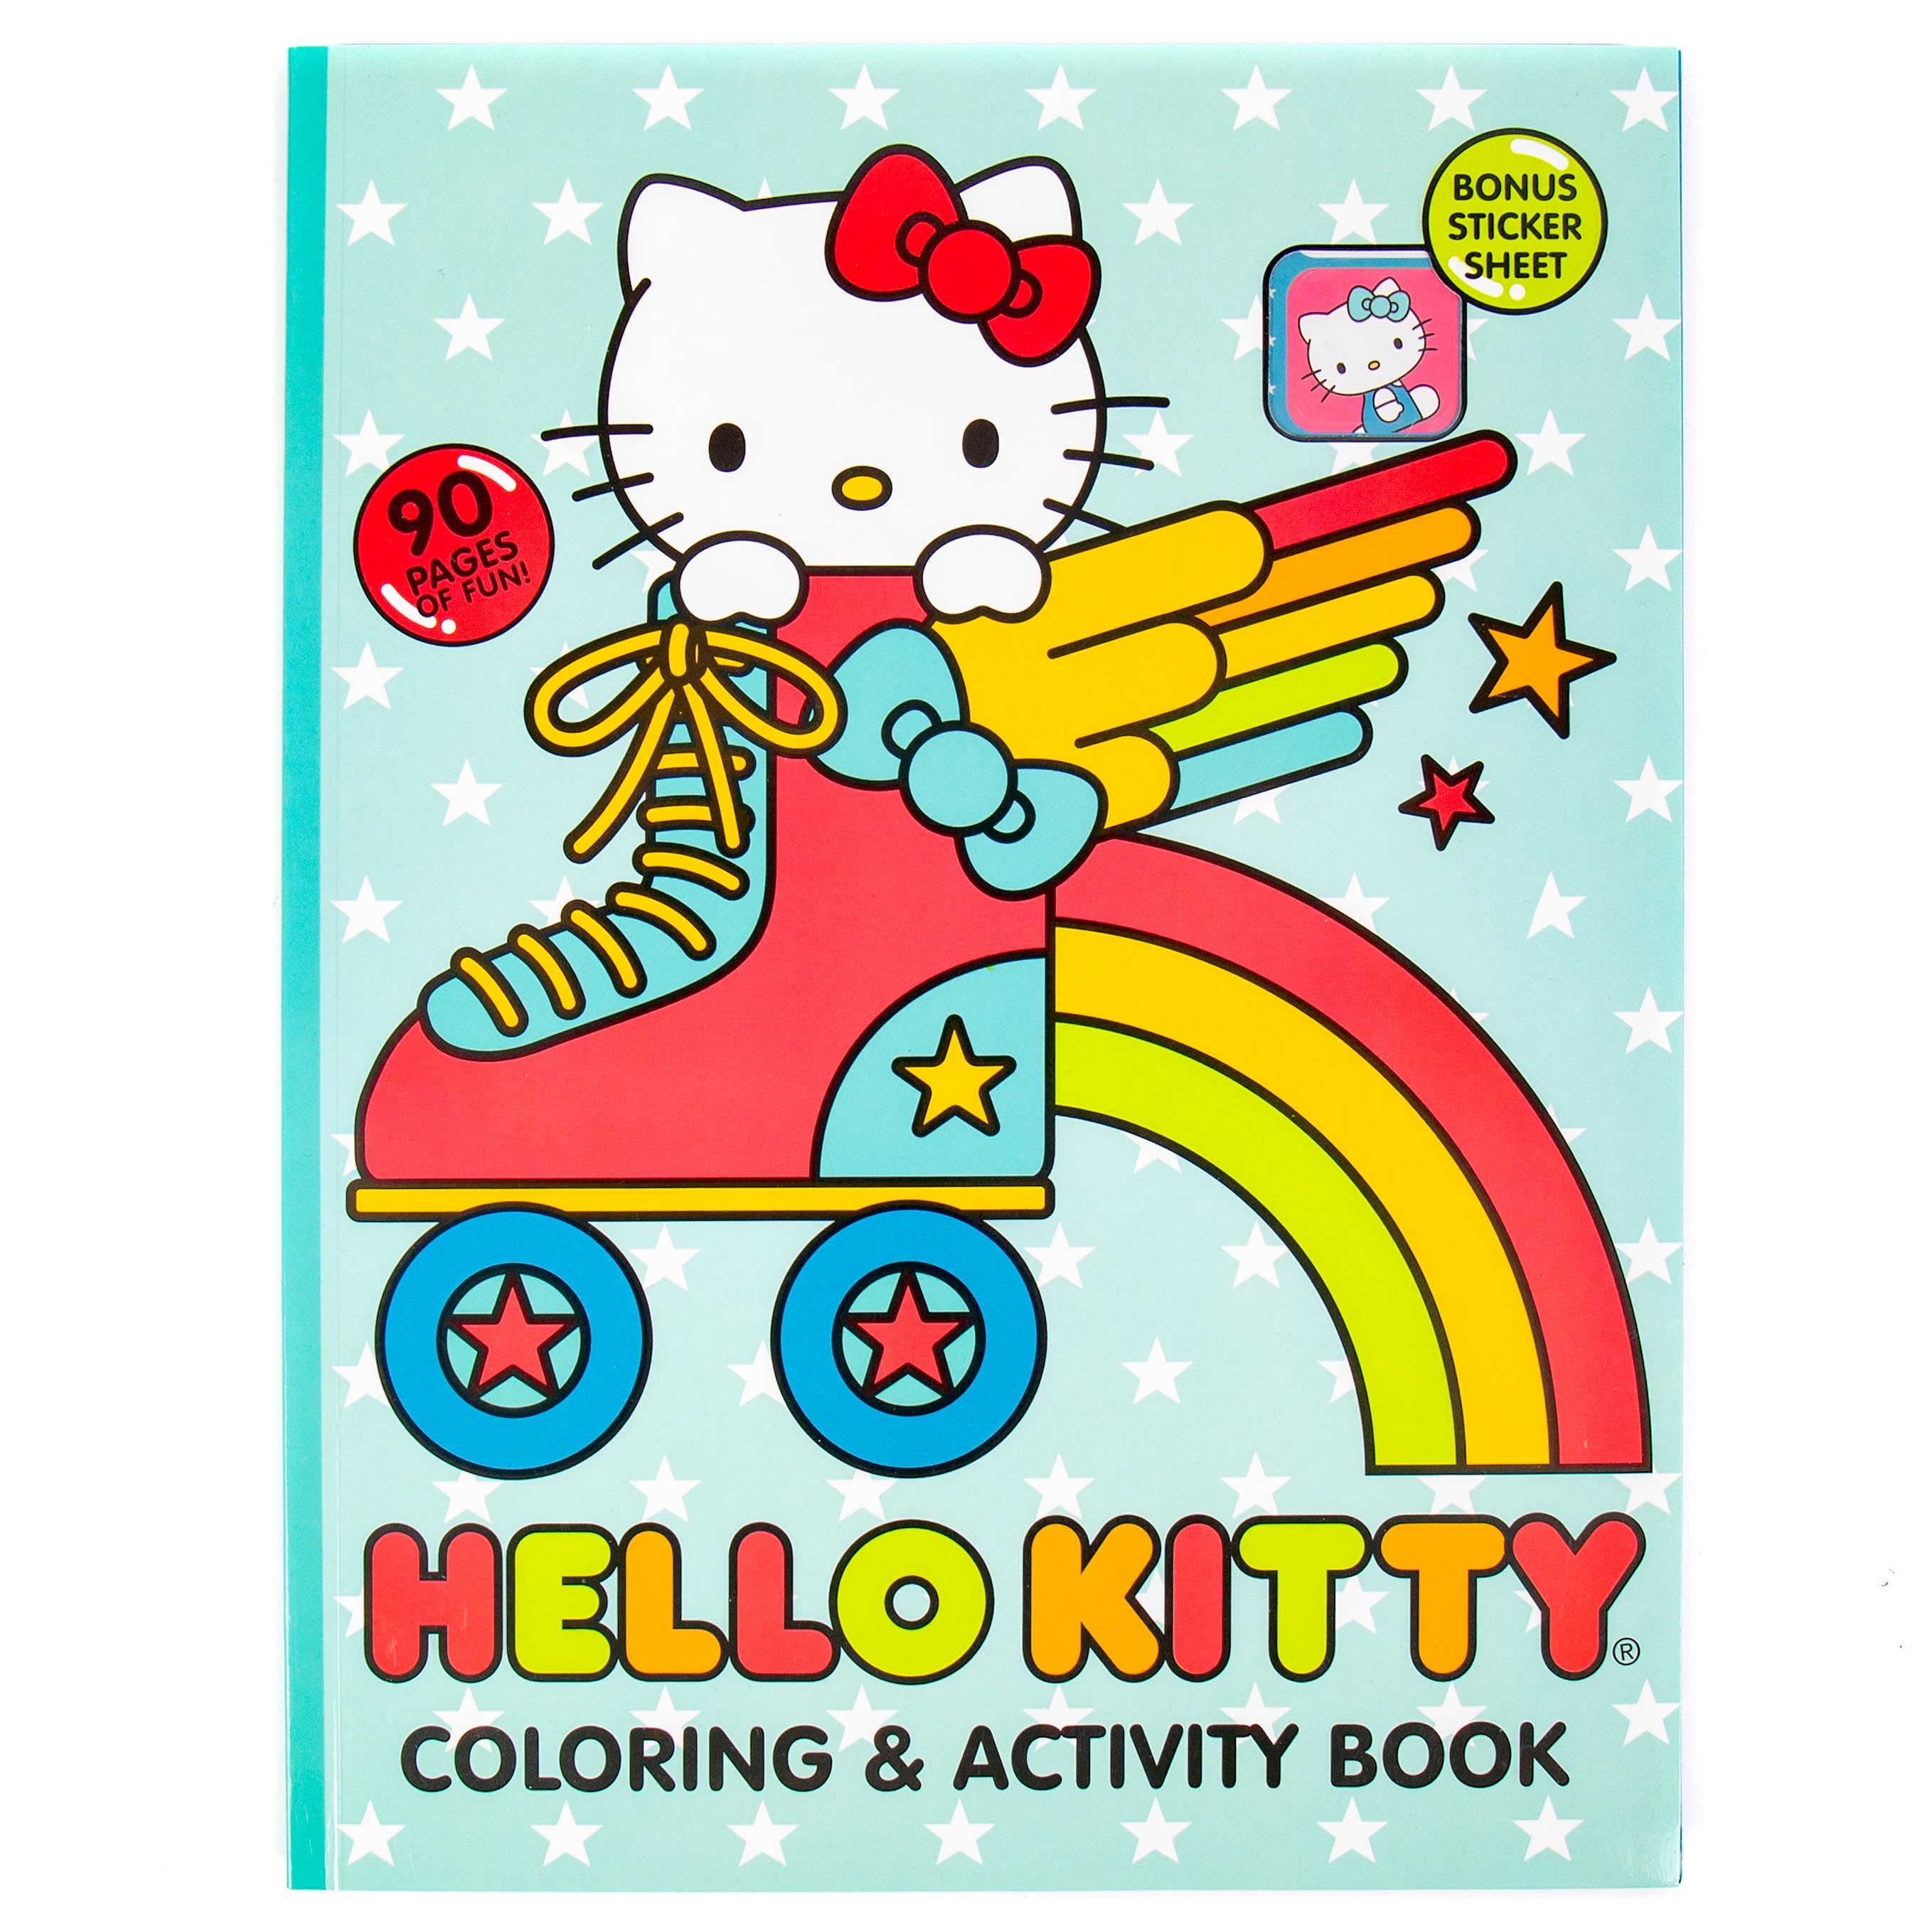 Hello Kitty Coloring Book, 90 Pgs